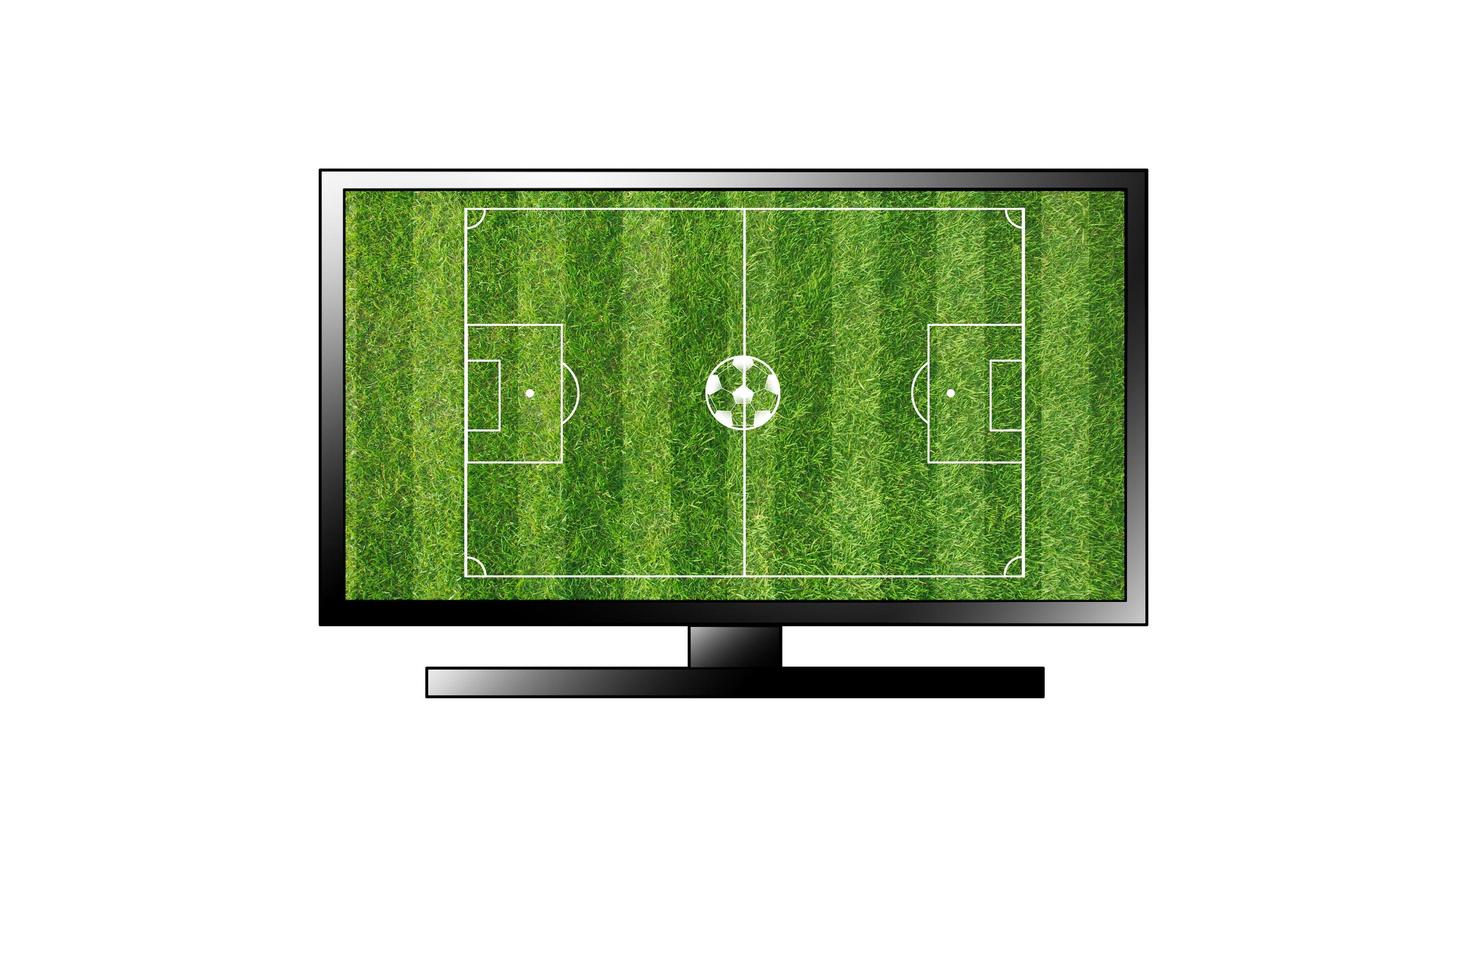 Terrain de football tv isolé sur fond blanc photo